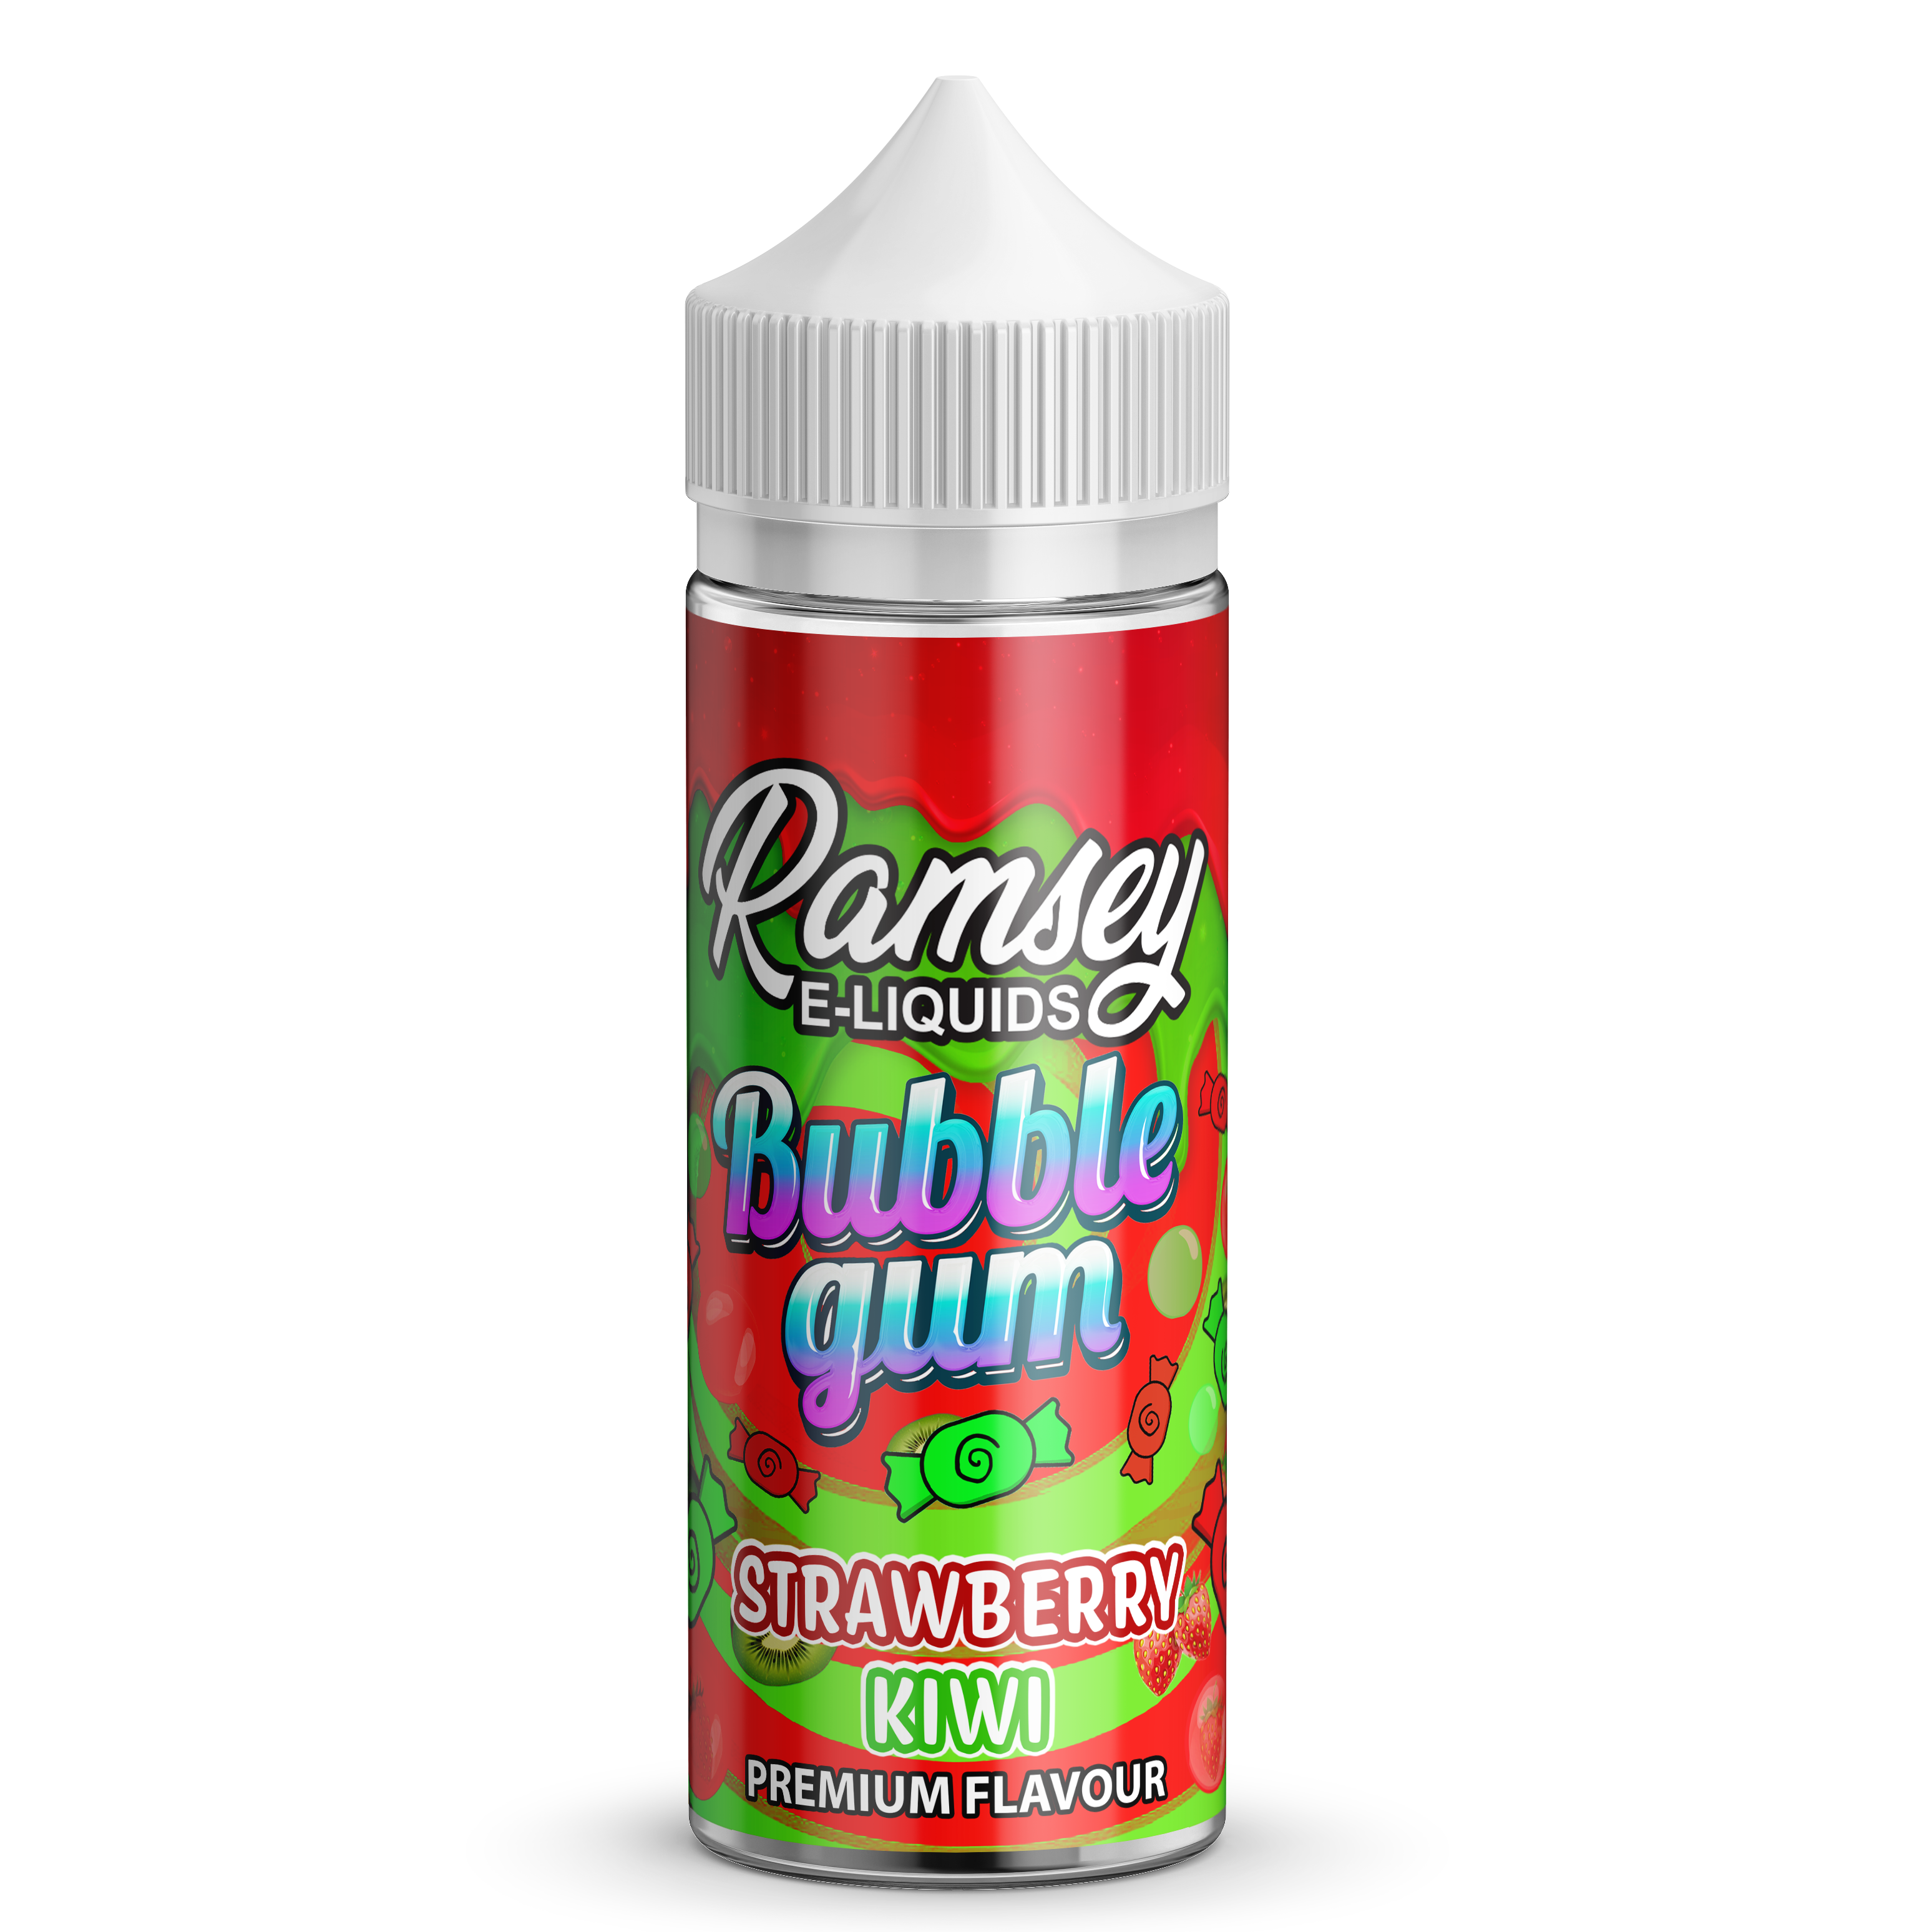 Ramsey E-Liquids Bubblegum Strawberry Kiwi 0mg 100ml Shortfill E-Liquid